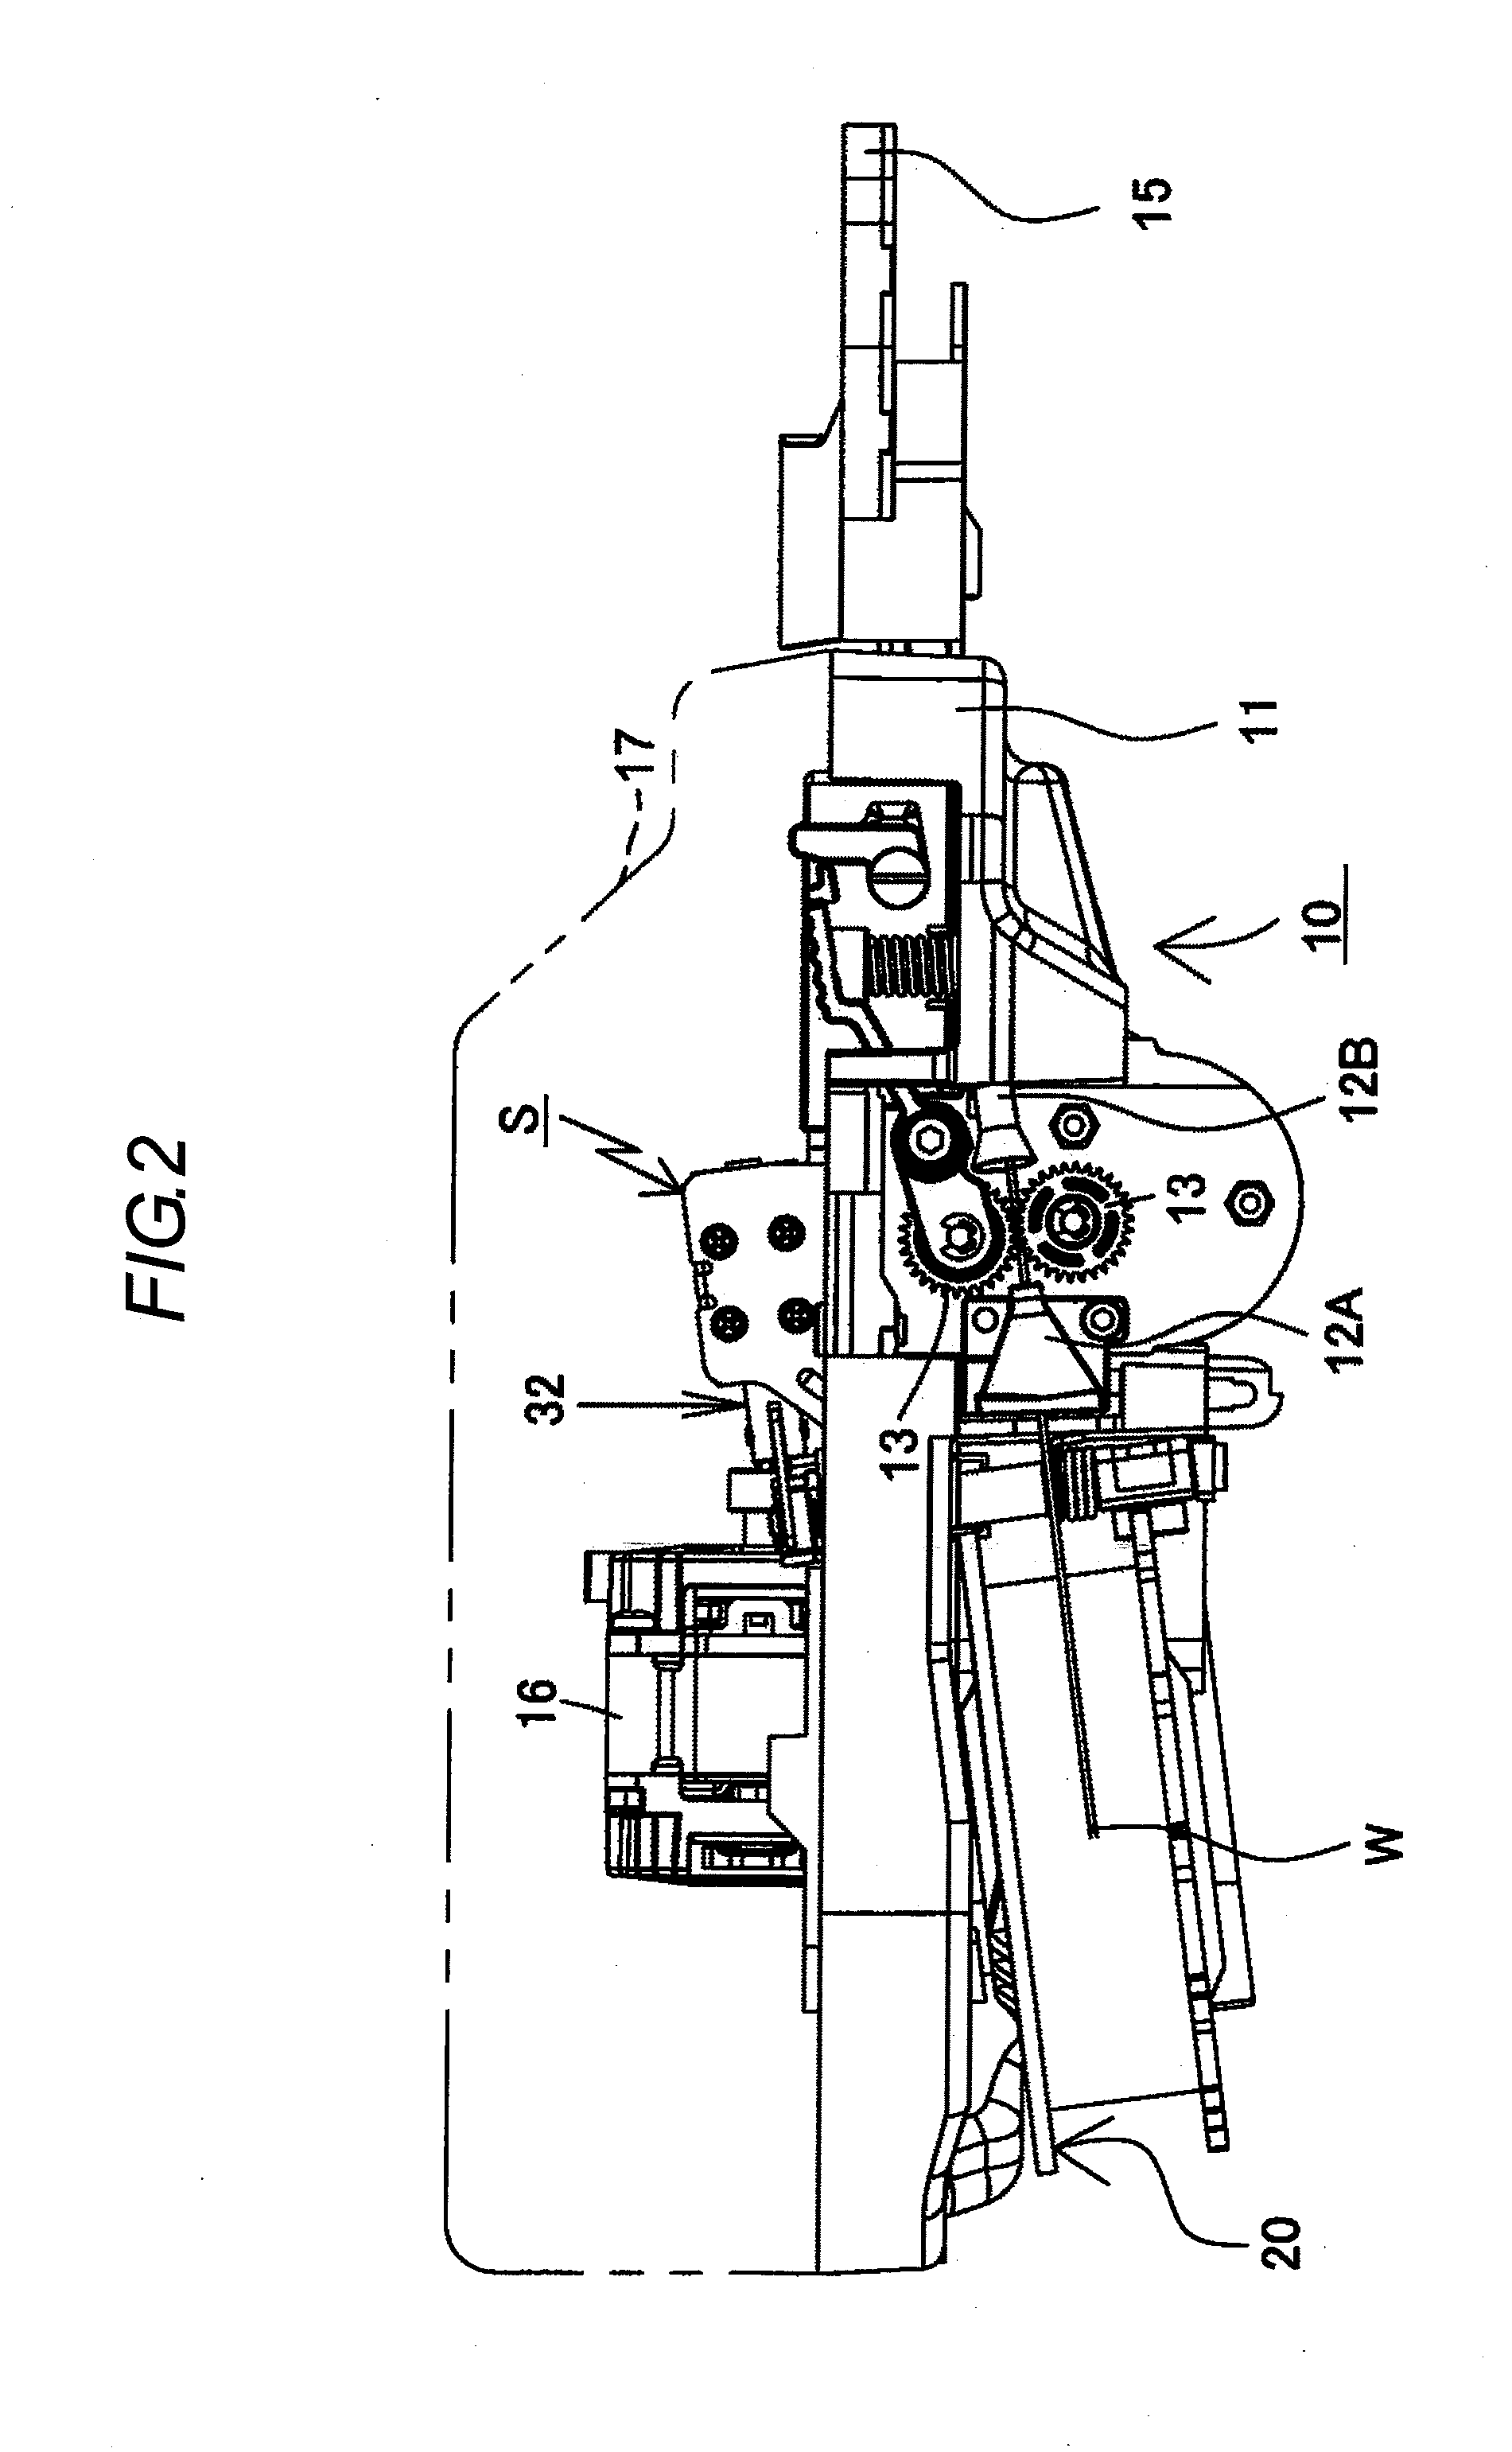 Brake system of wire reel in reinforcing bar binding machine